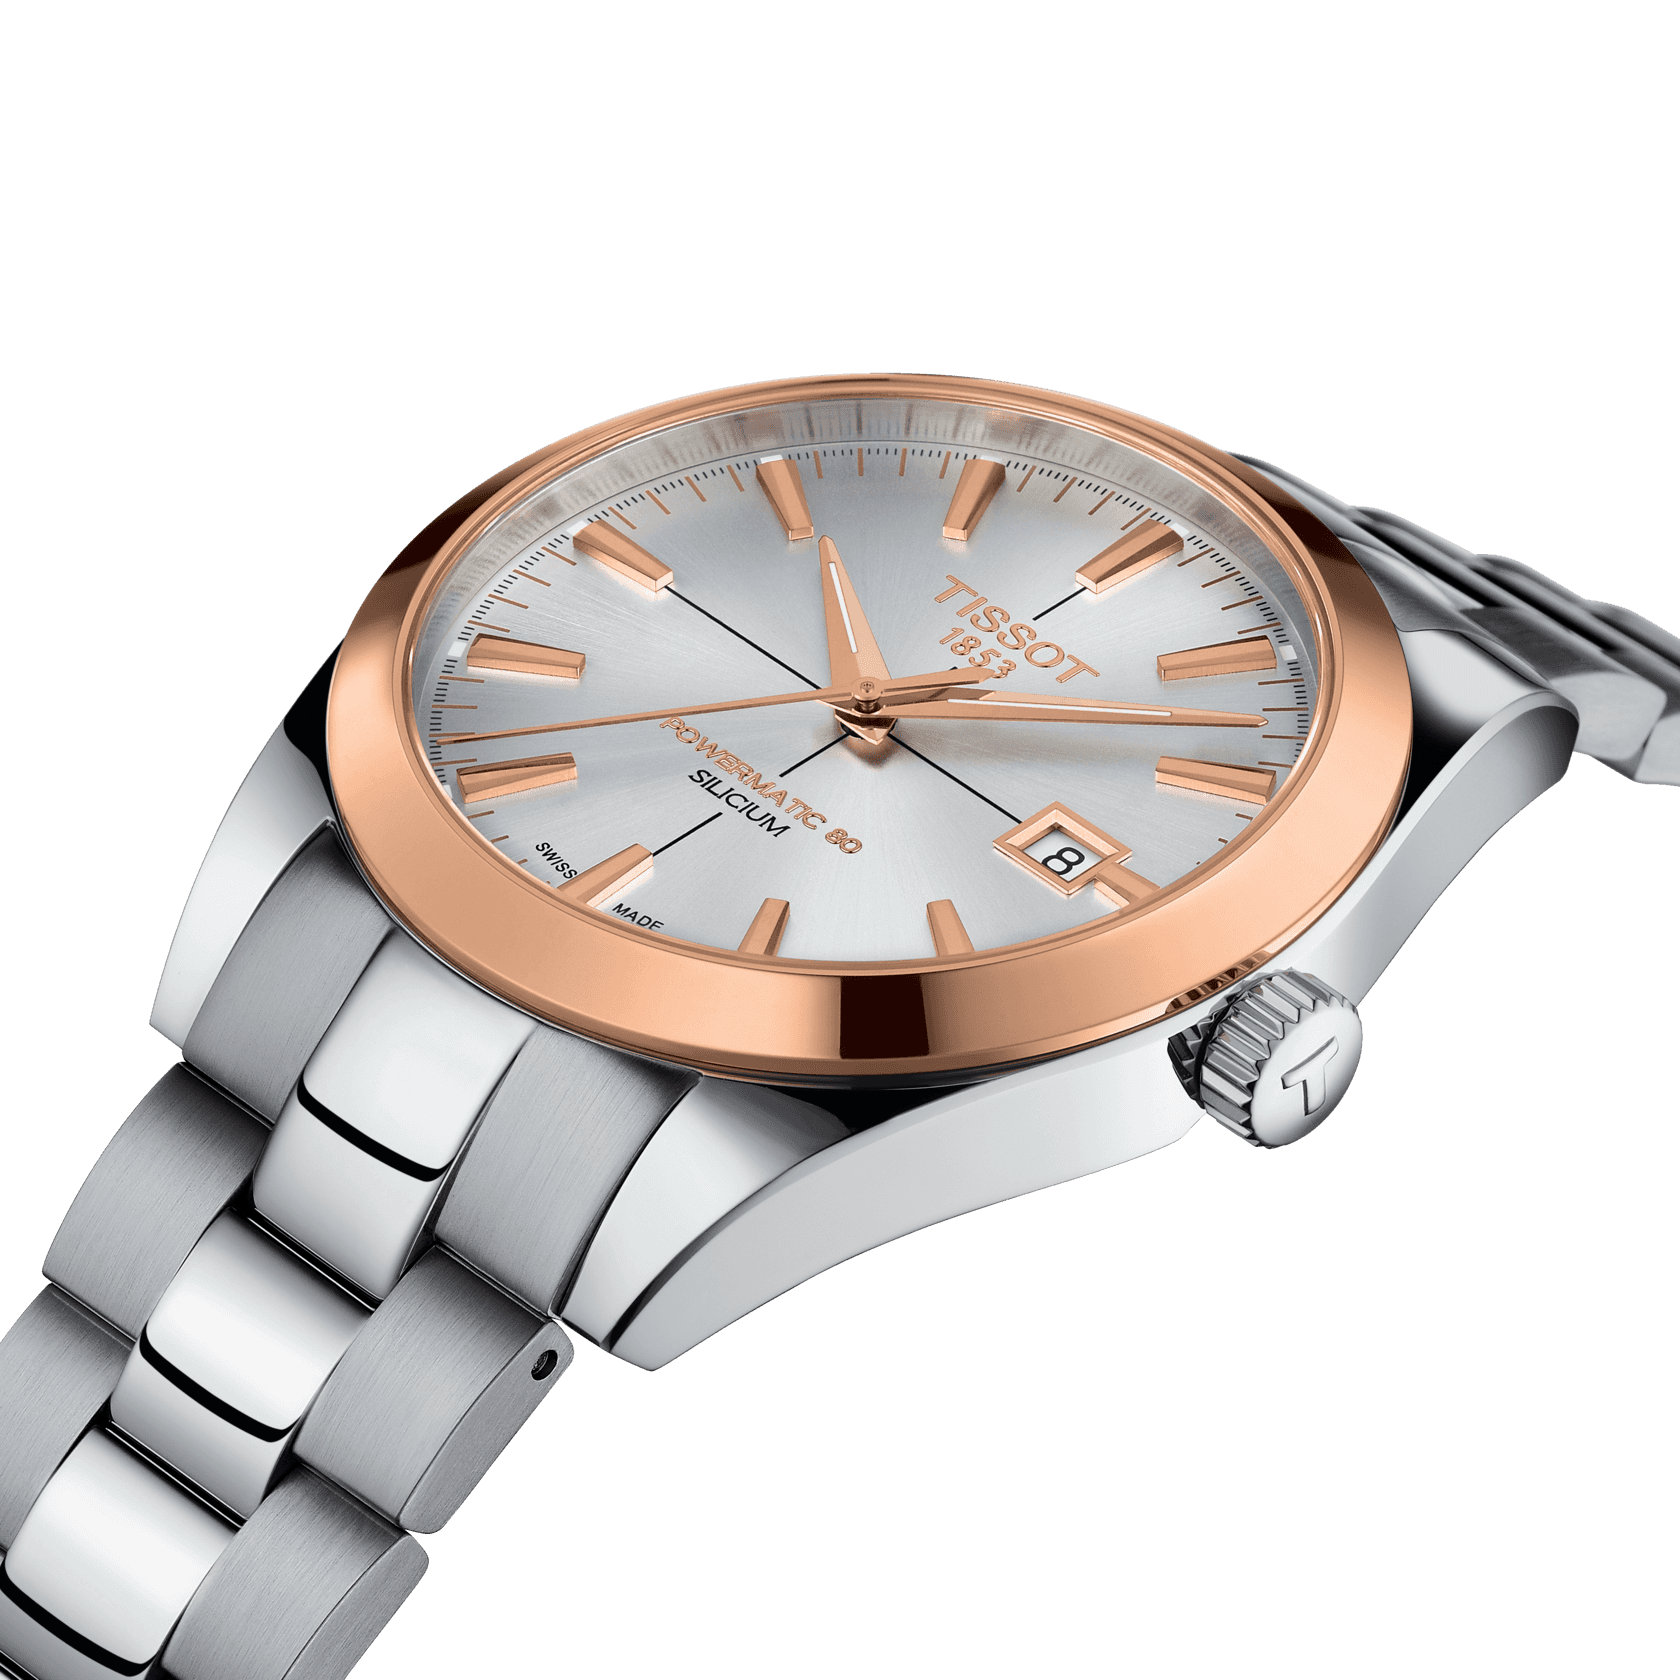 Luxury Replica Watch Forum Trusted Dealers